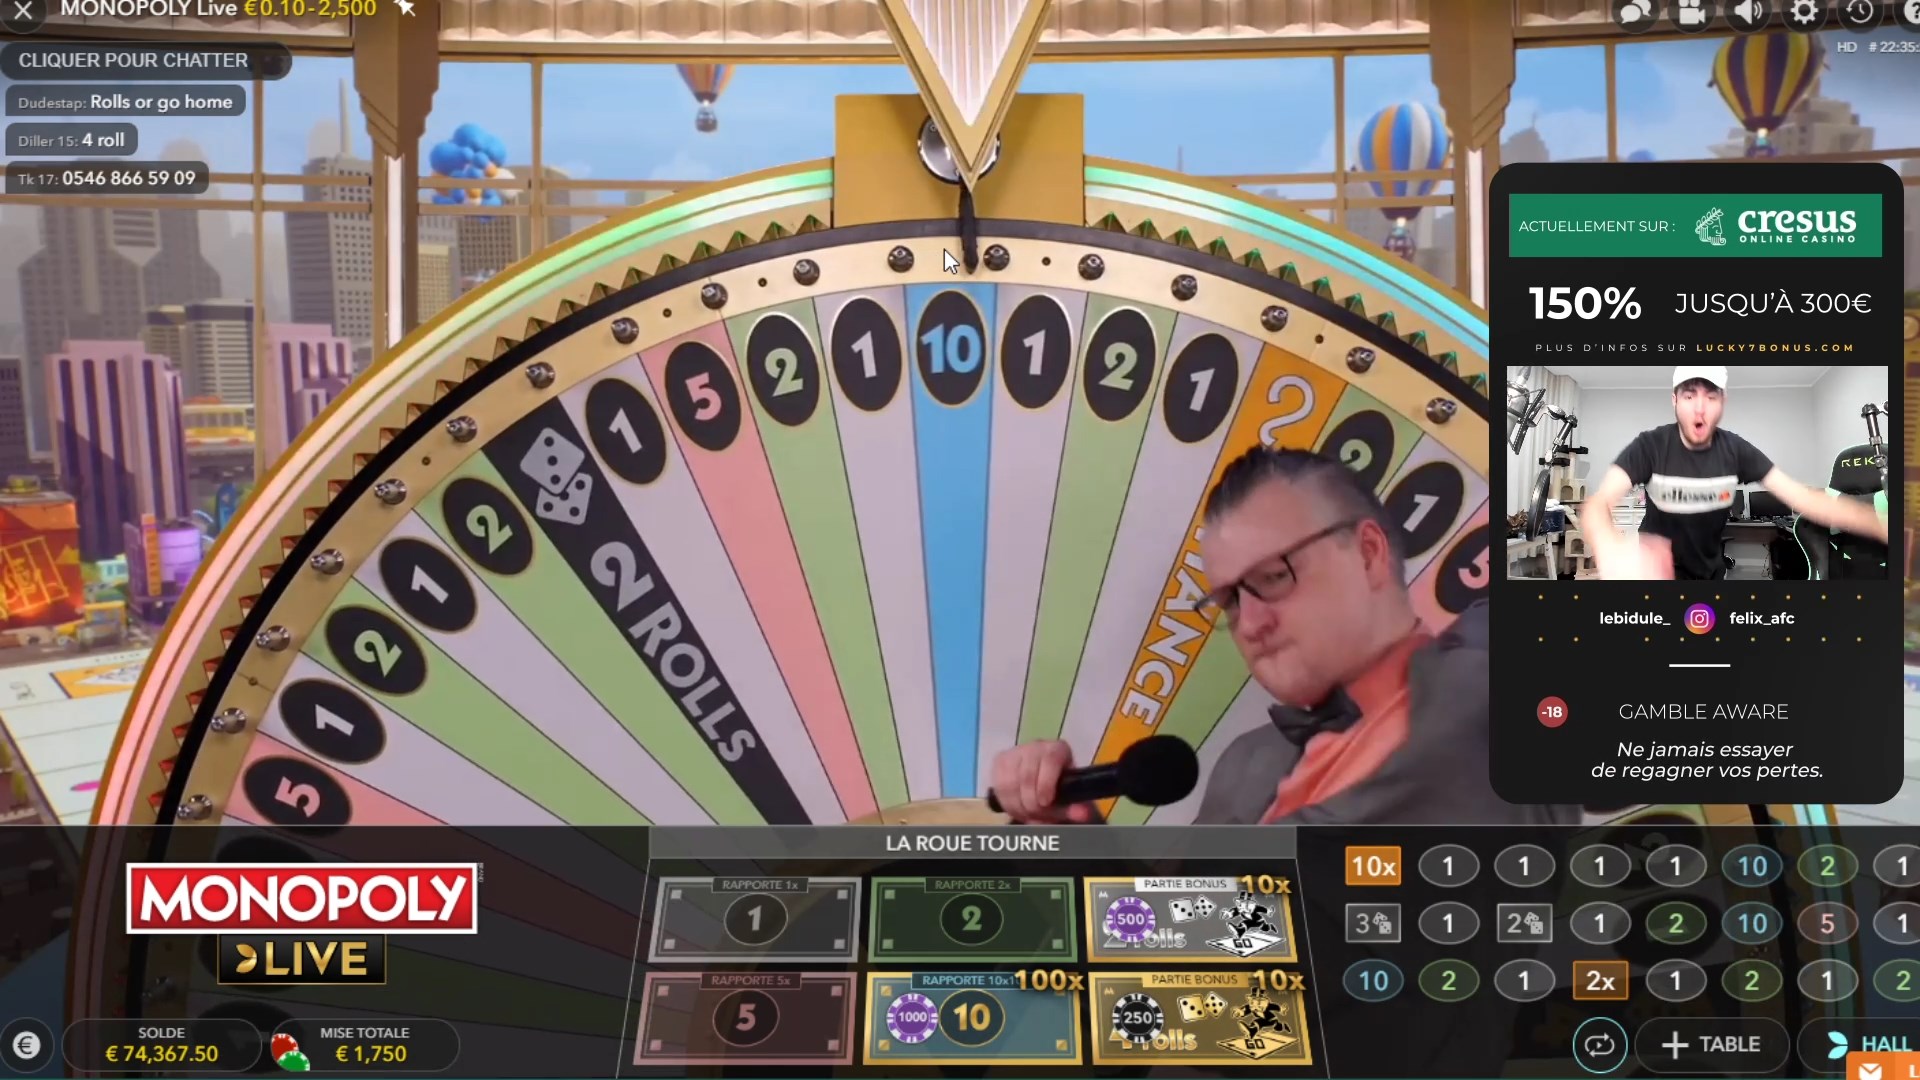 Bidule gagne 100 000€ au Monopoly Live